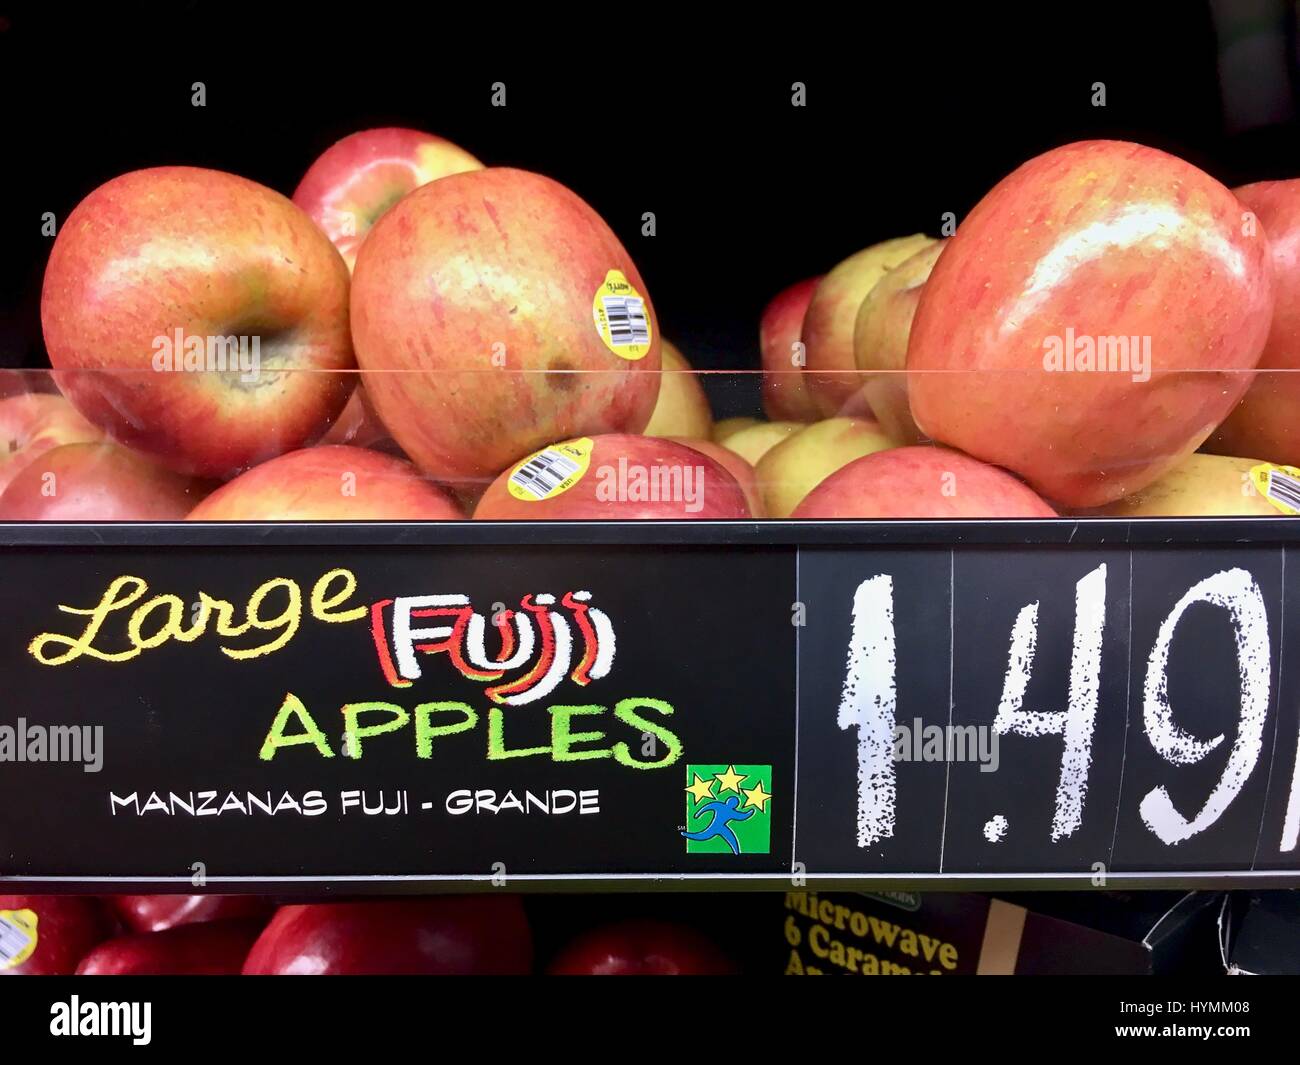 Large Fuji Apples at the produce market Stock Photo